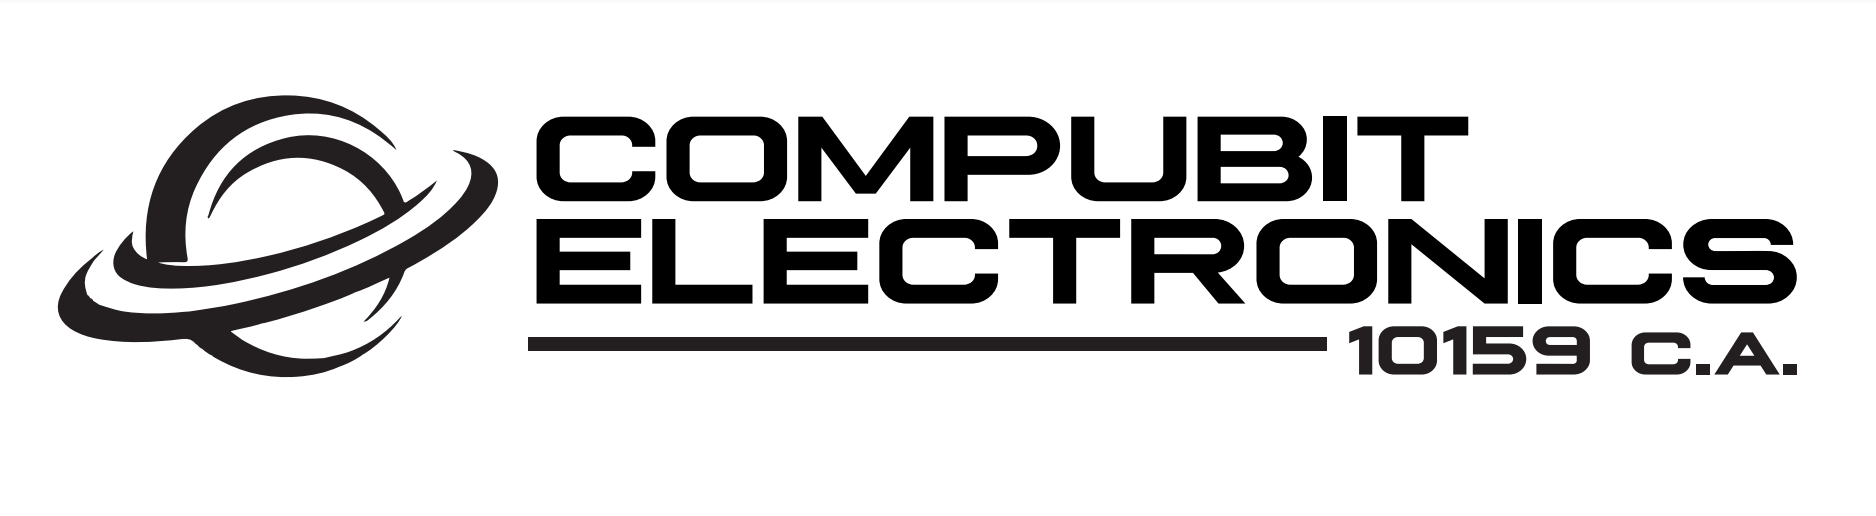 Compubit Electronics 10159, C.A., Raul Mendez